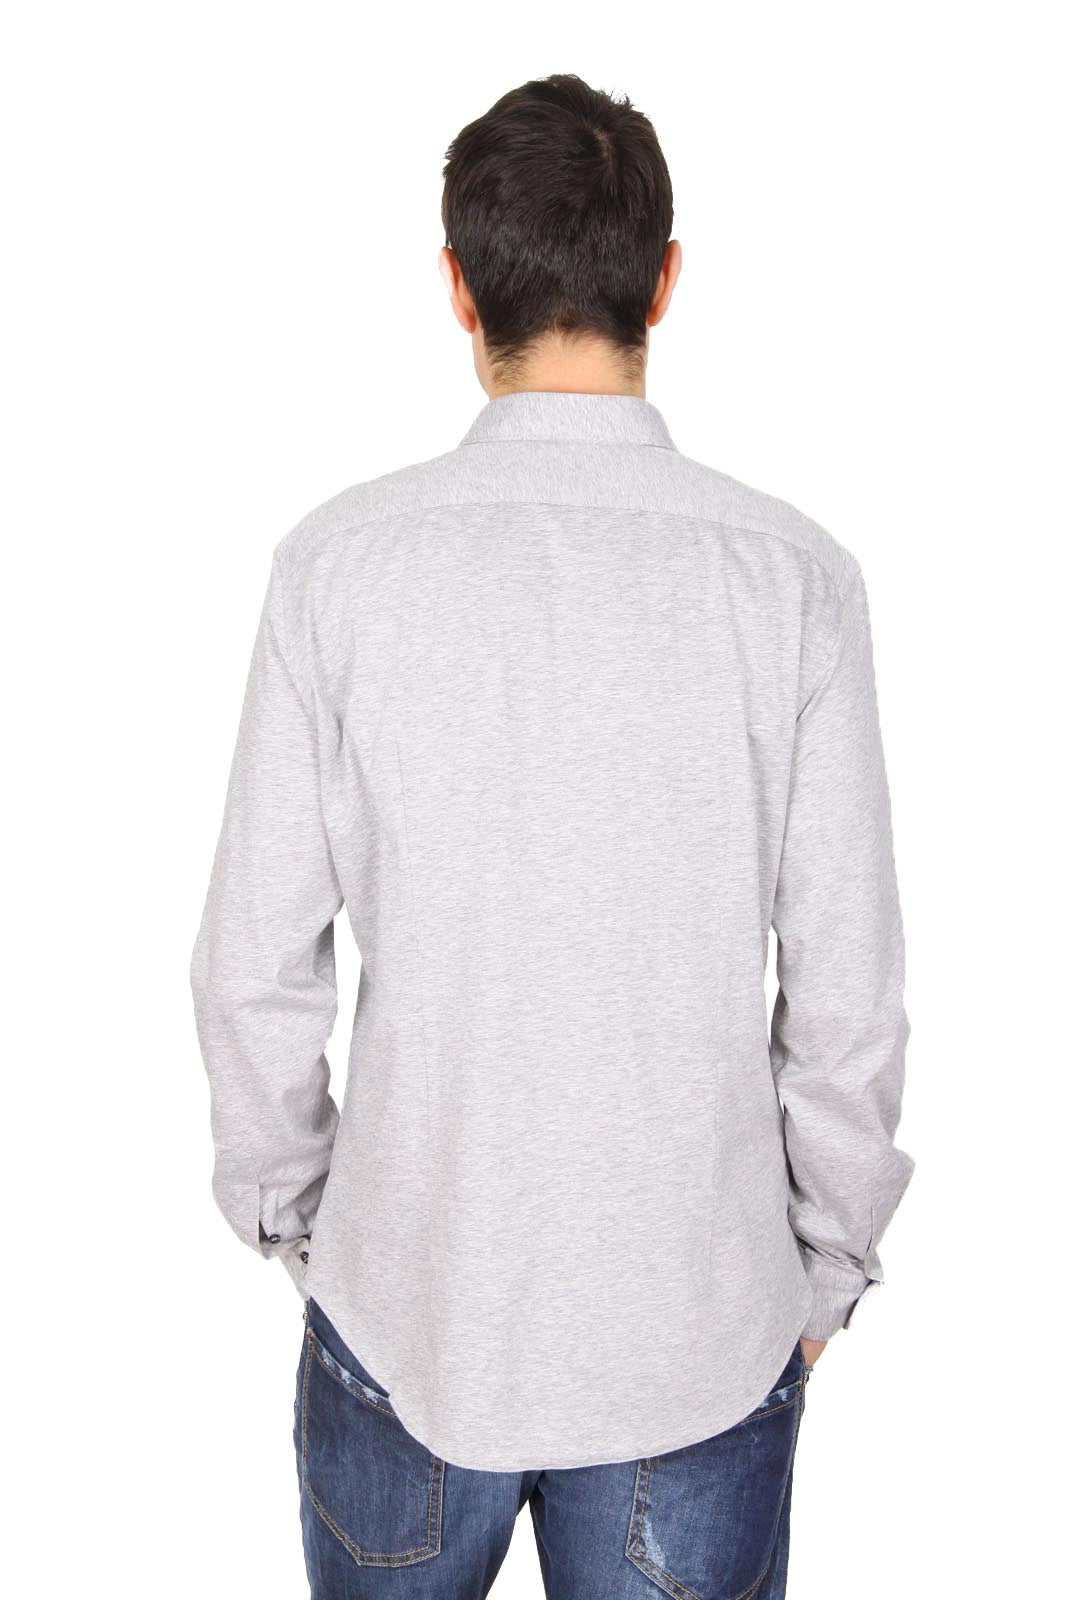 V 1969 Italia mens long sleeve shirt Paris Jersey Grey Melange